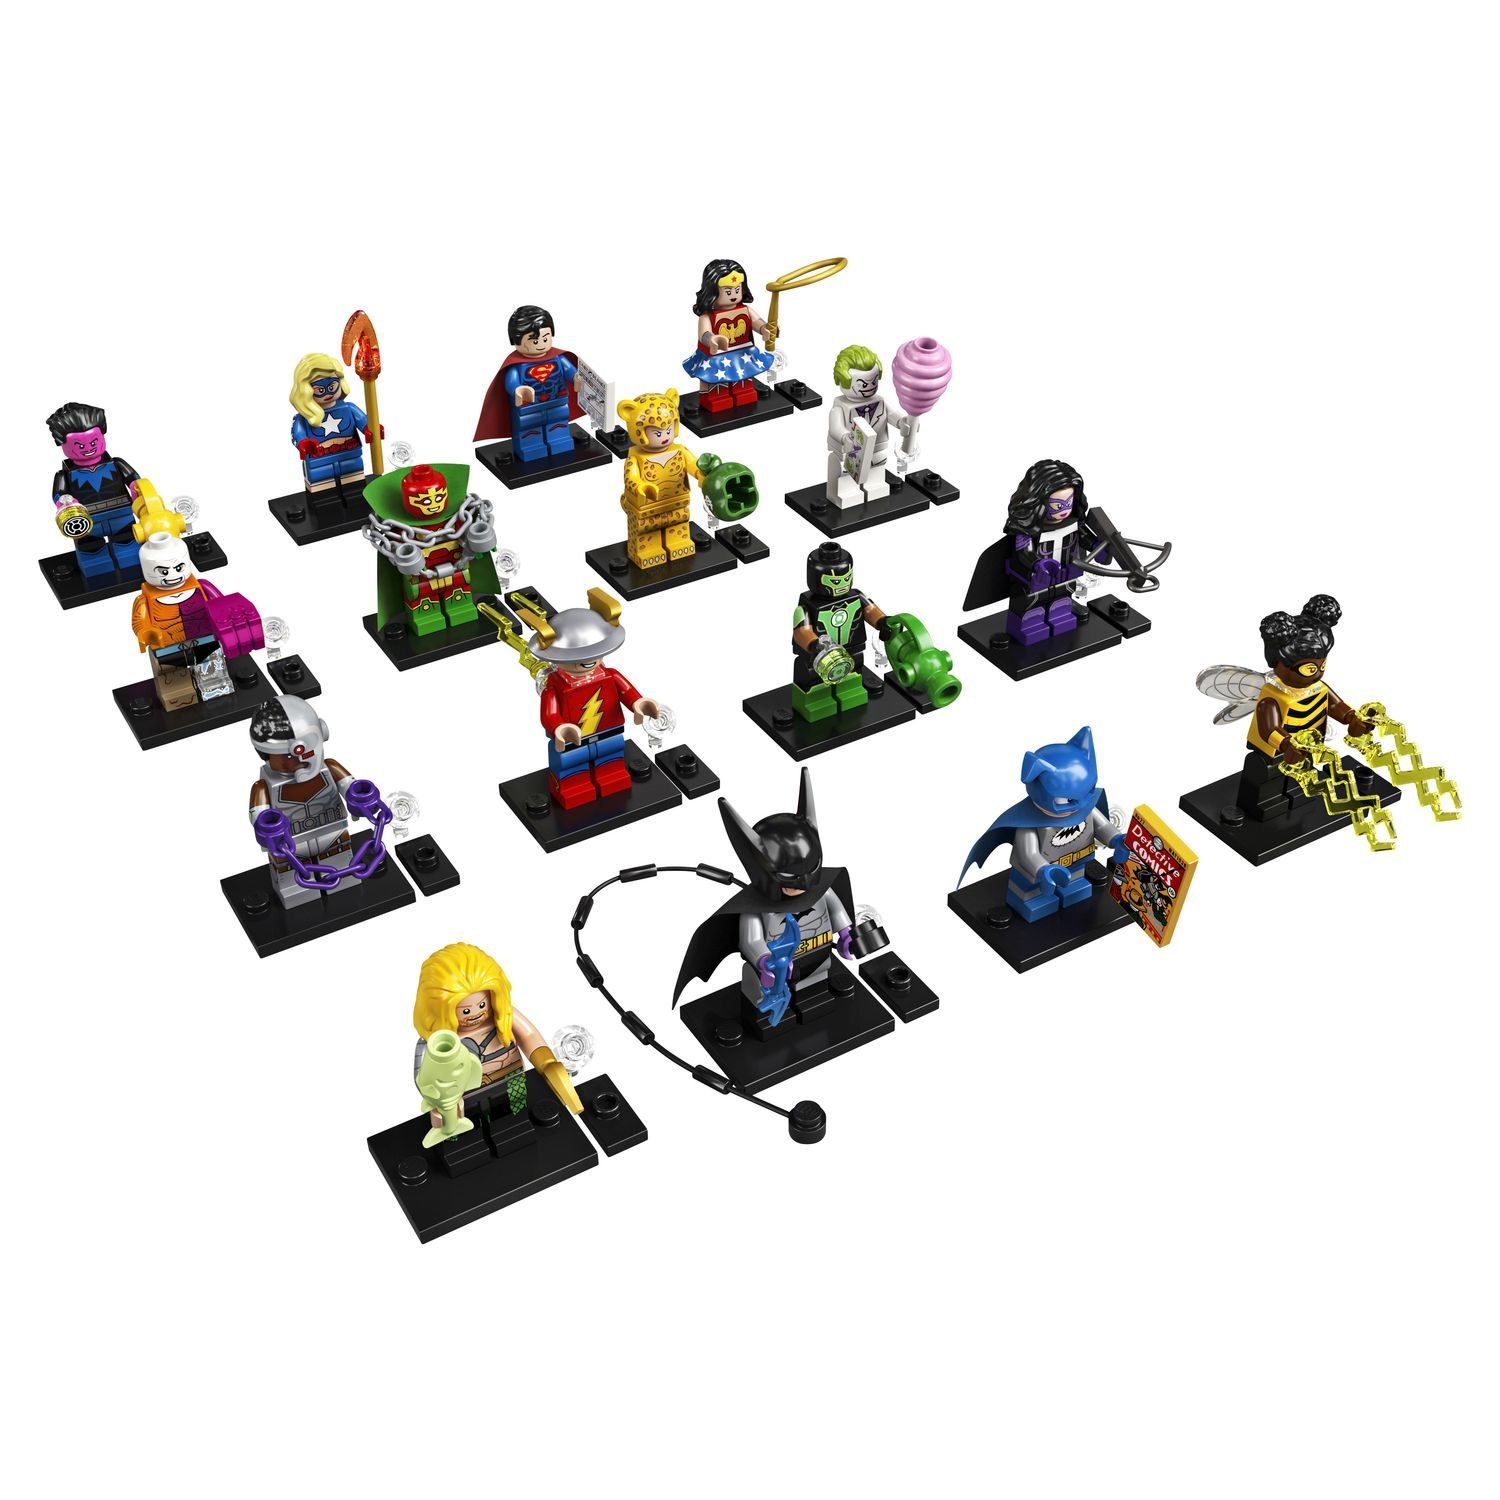 Lego Minifigures 71026 DC Super Heroes Series в асс.